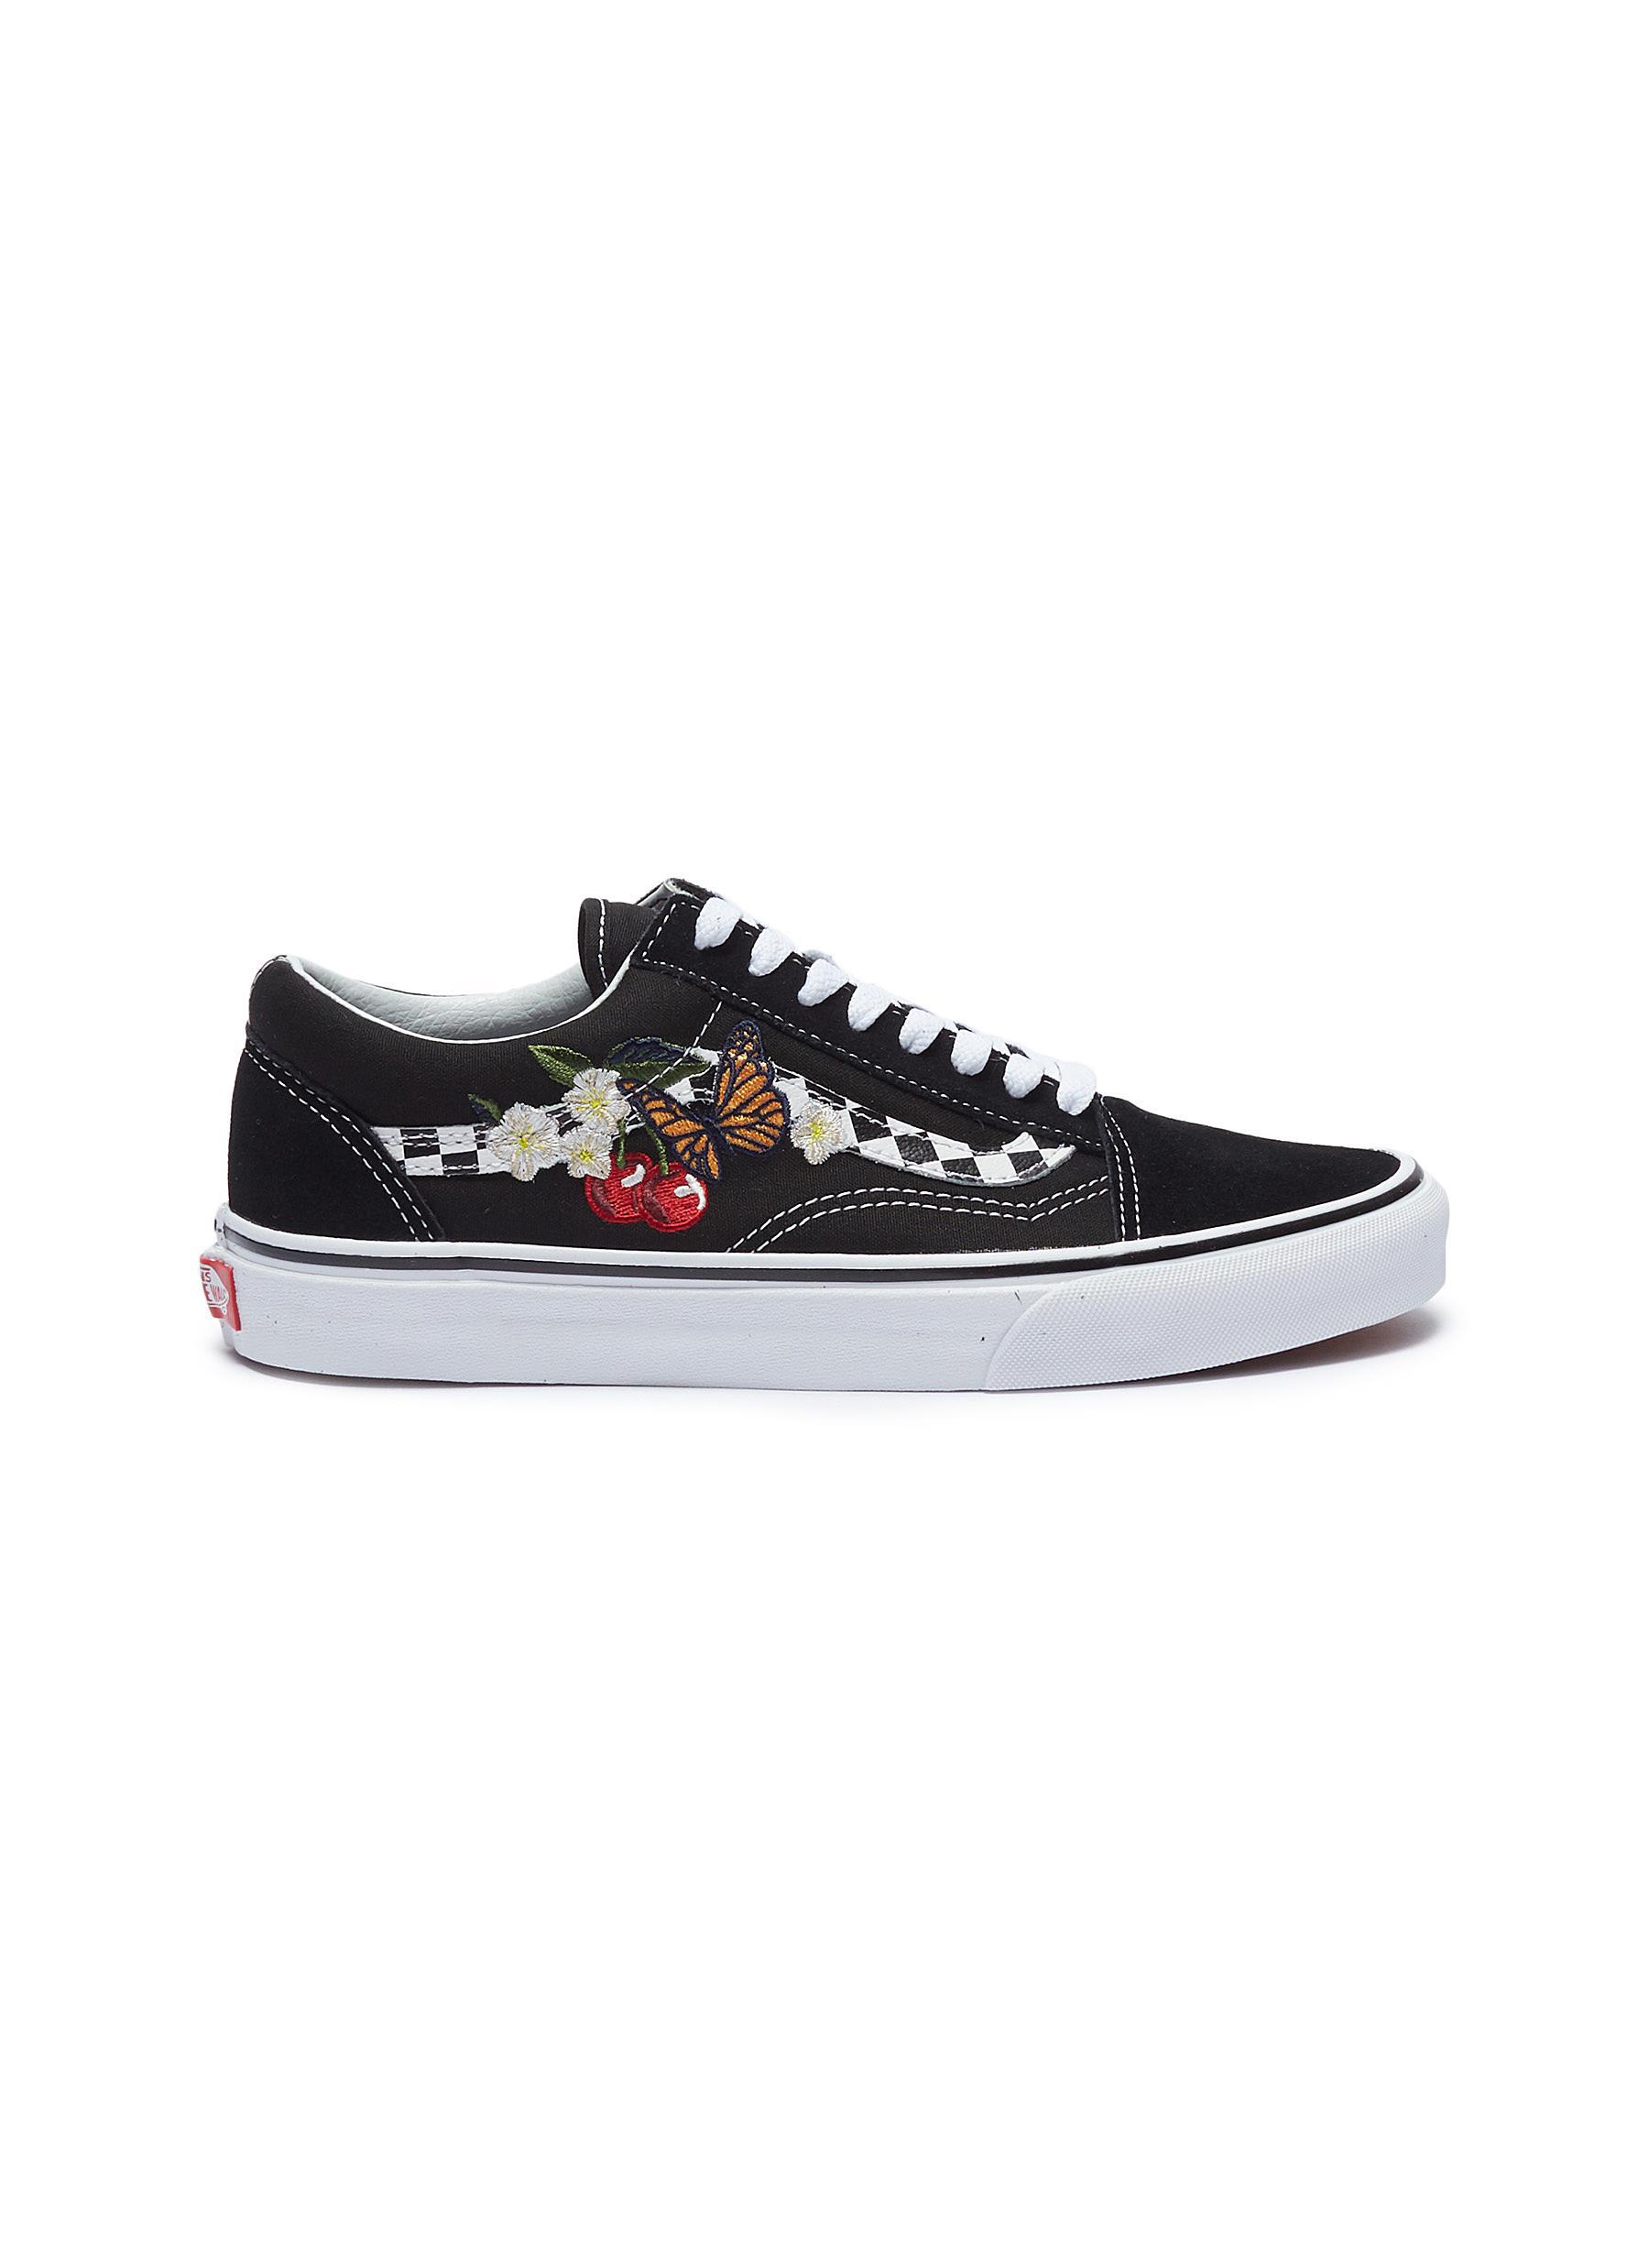 skinke Samle Monarch Vans 'checker Floral Old Skool' Graphic Embroidered Sneakers in Black | Lyst